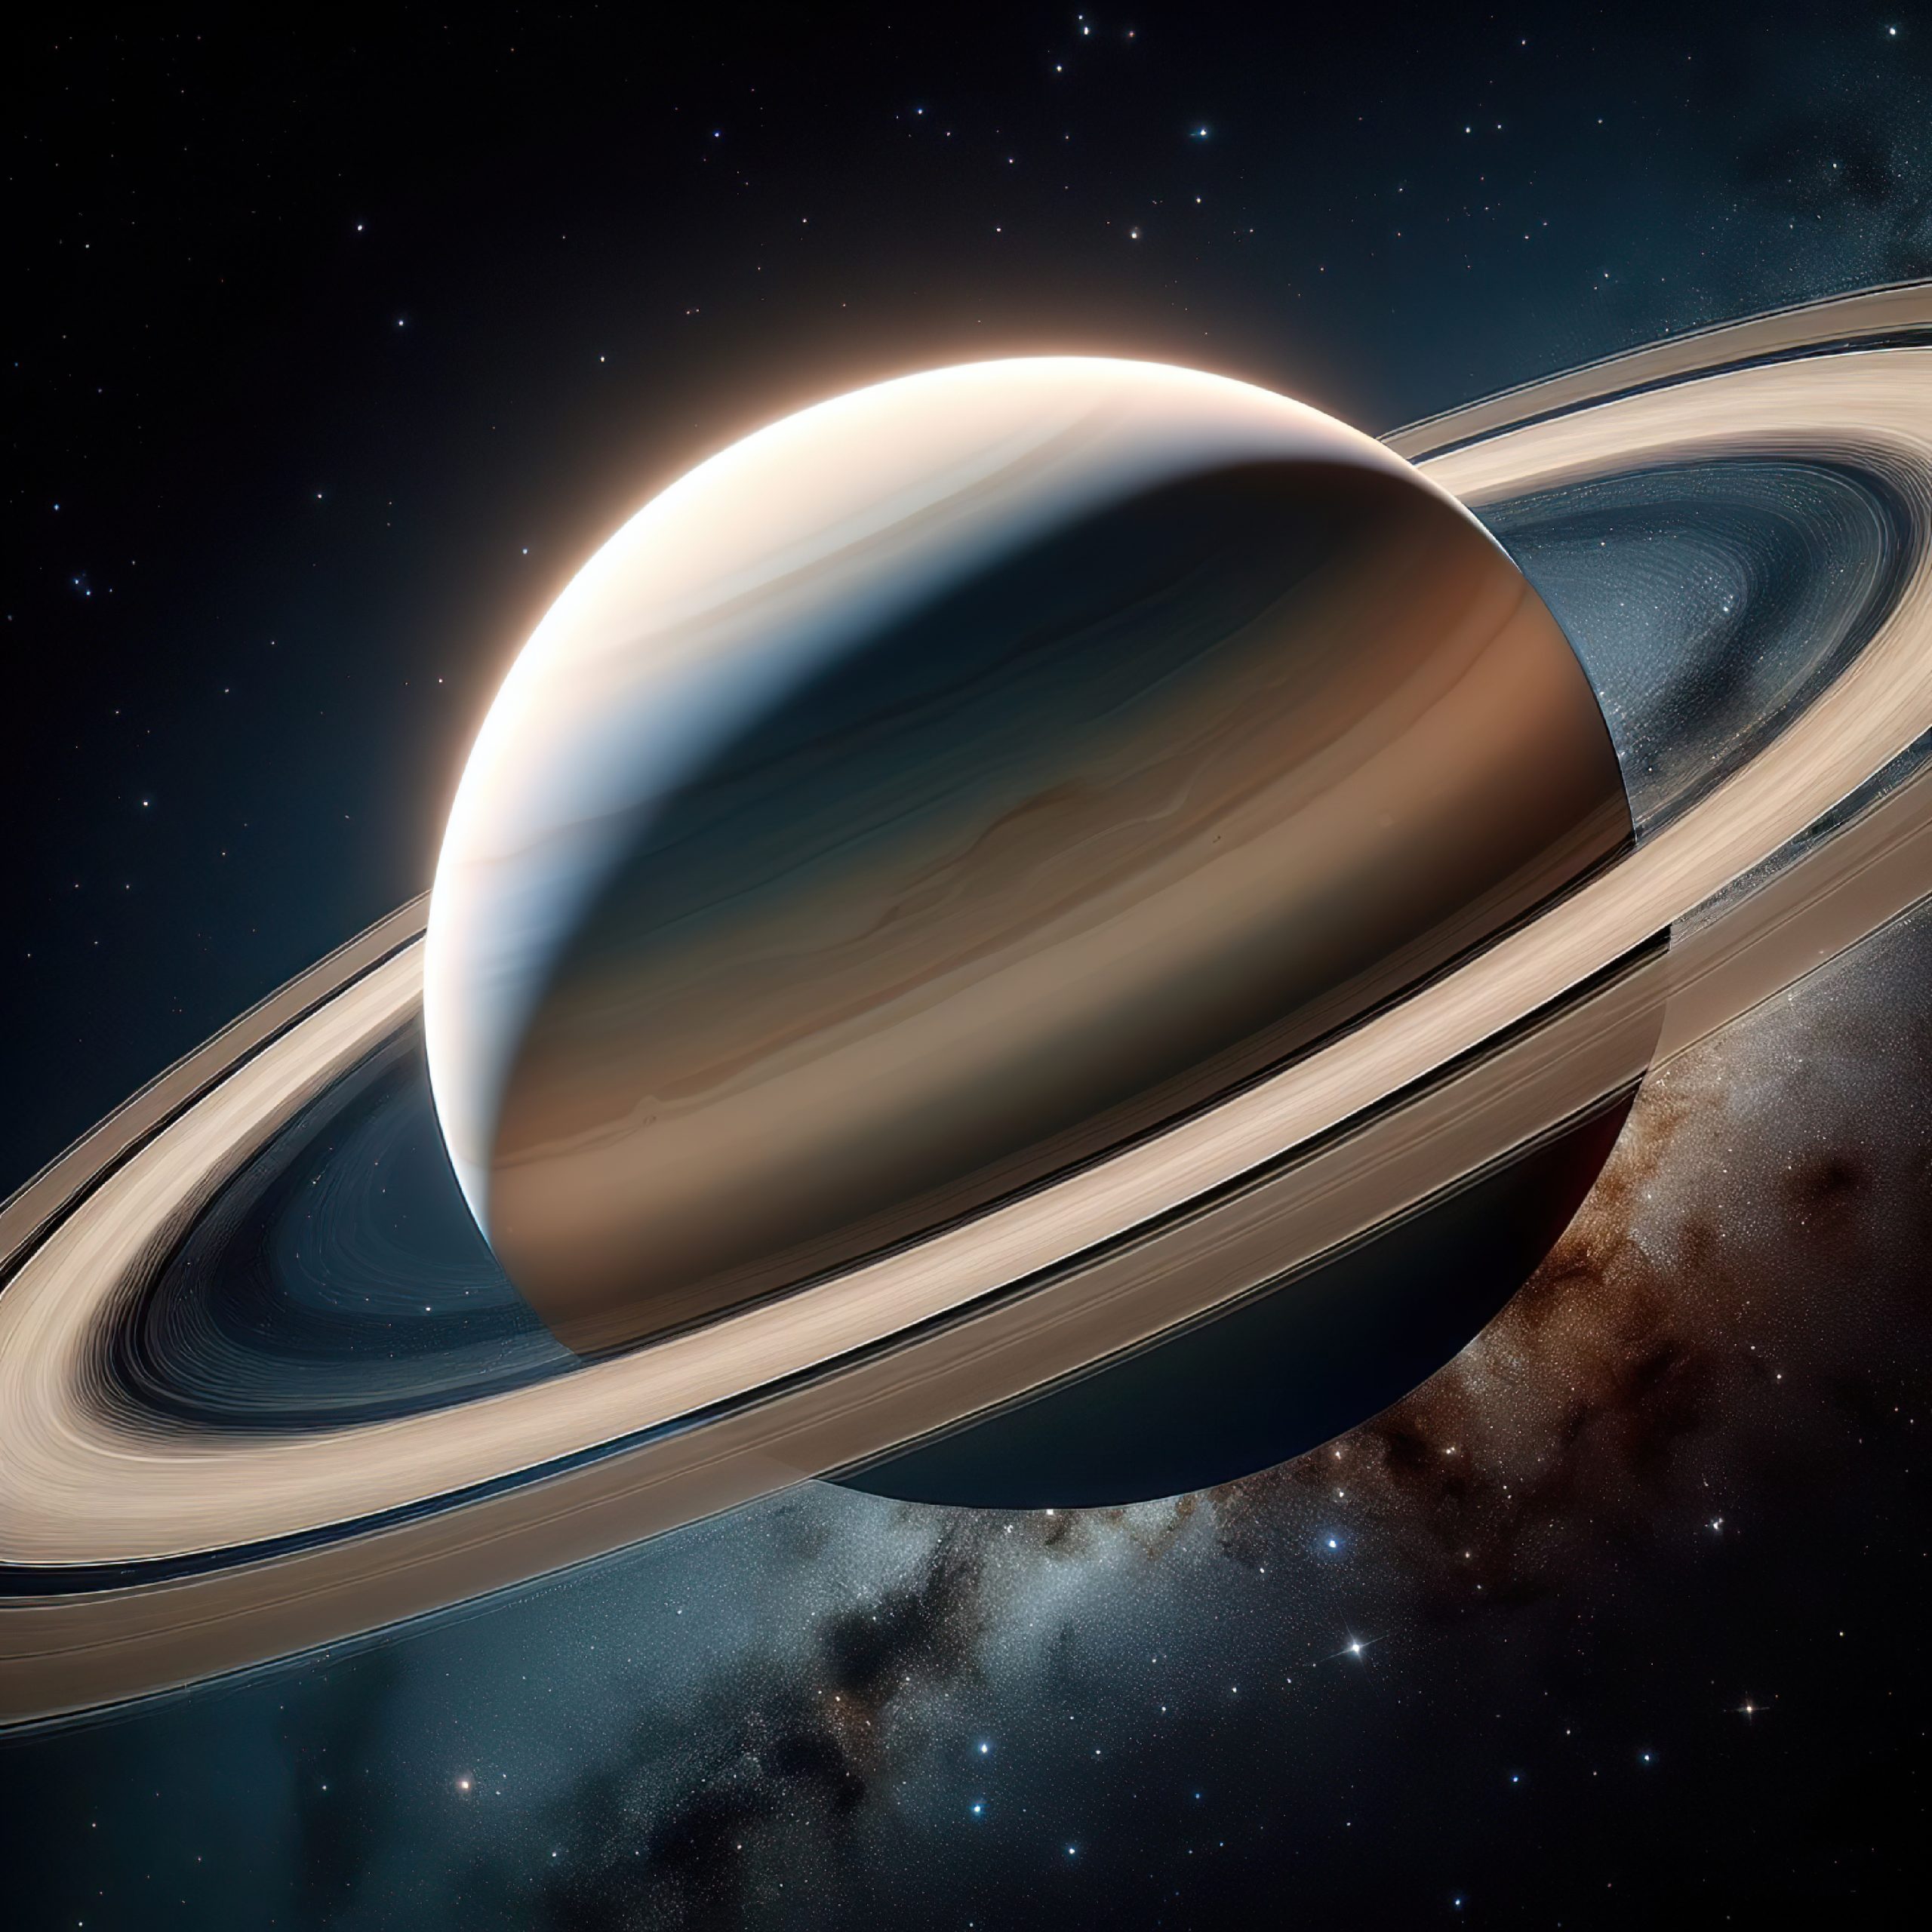 Surprising Discovery: Ocean Found on Saturn’s Moon Mimas - Image